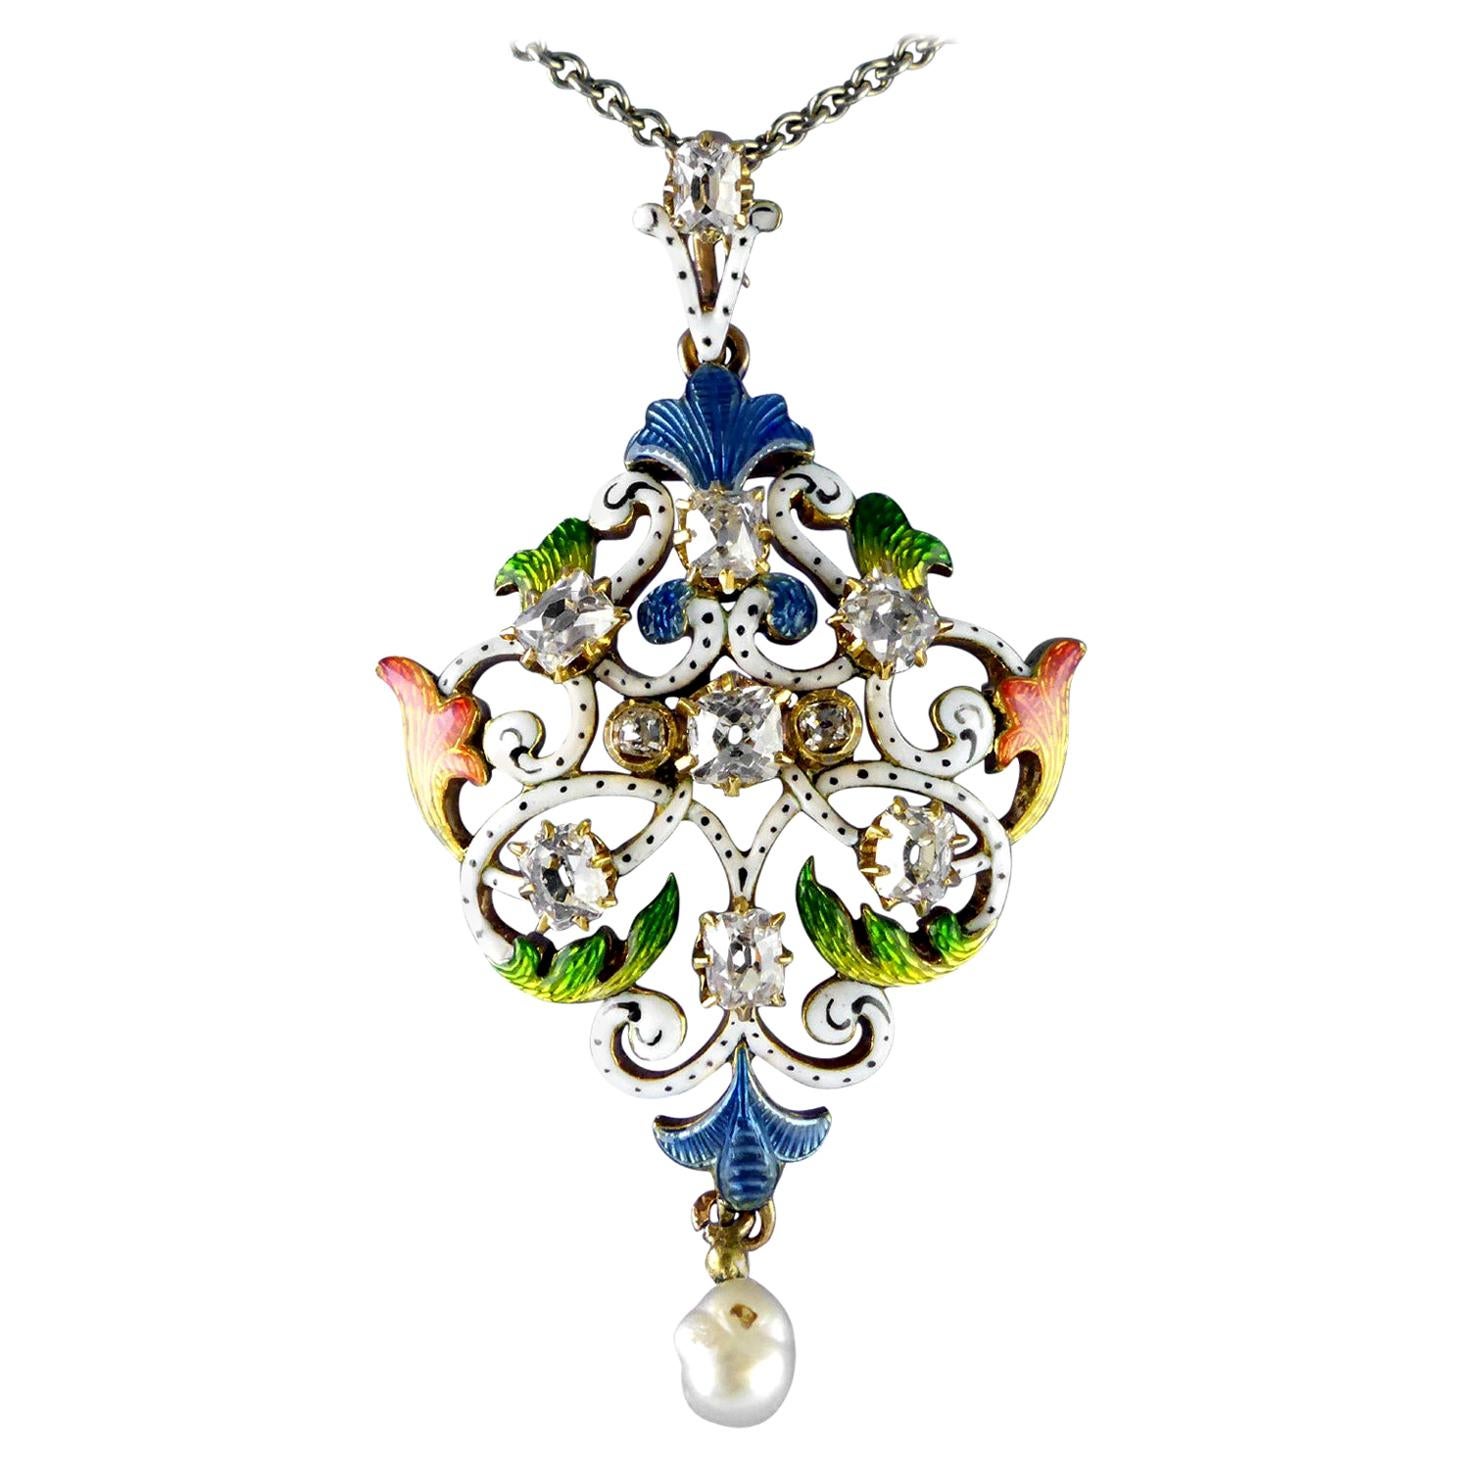 Art Nouveau Guilloché Enamel, Diamond, Pearl, Pendant, circa 1900